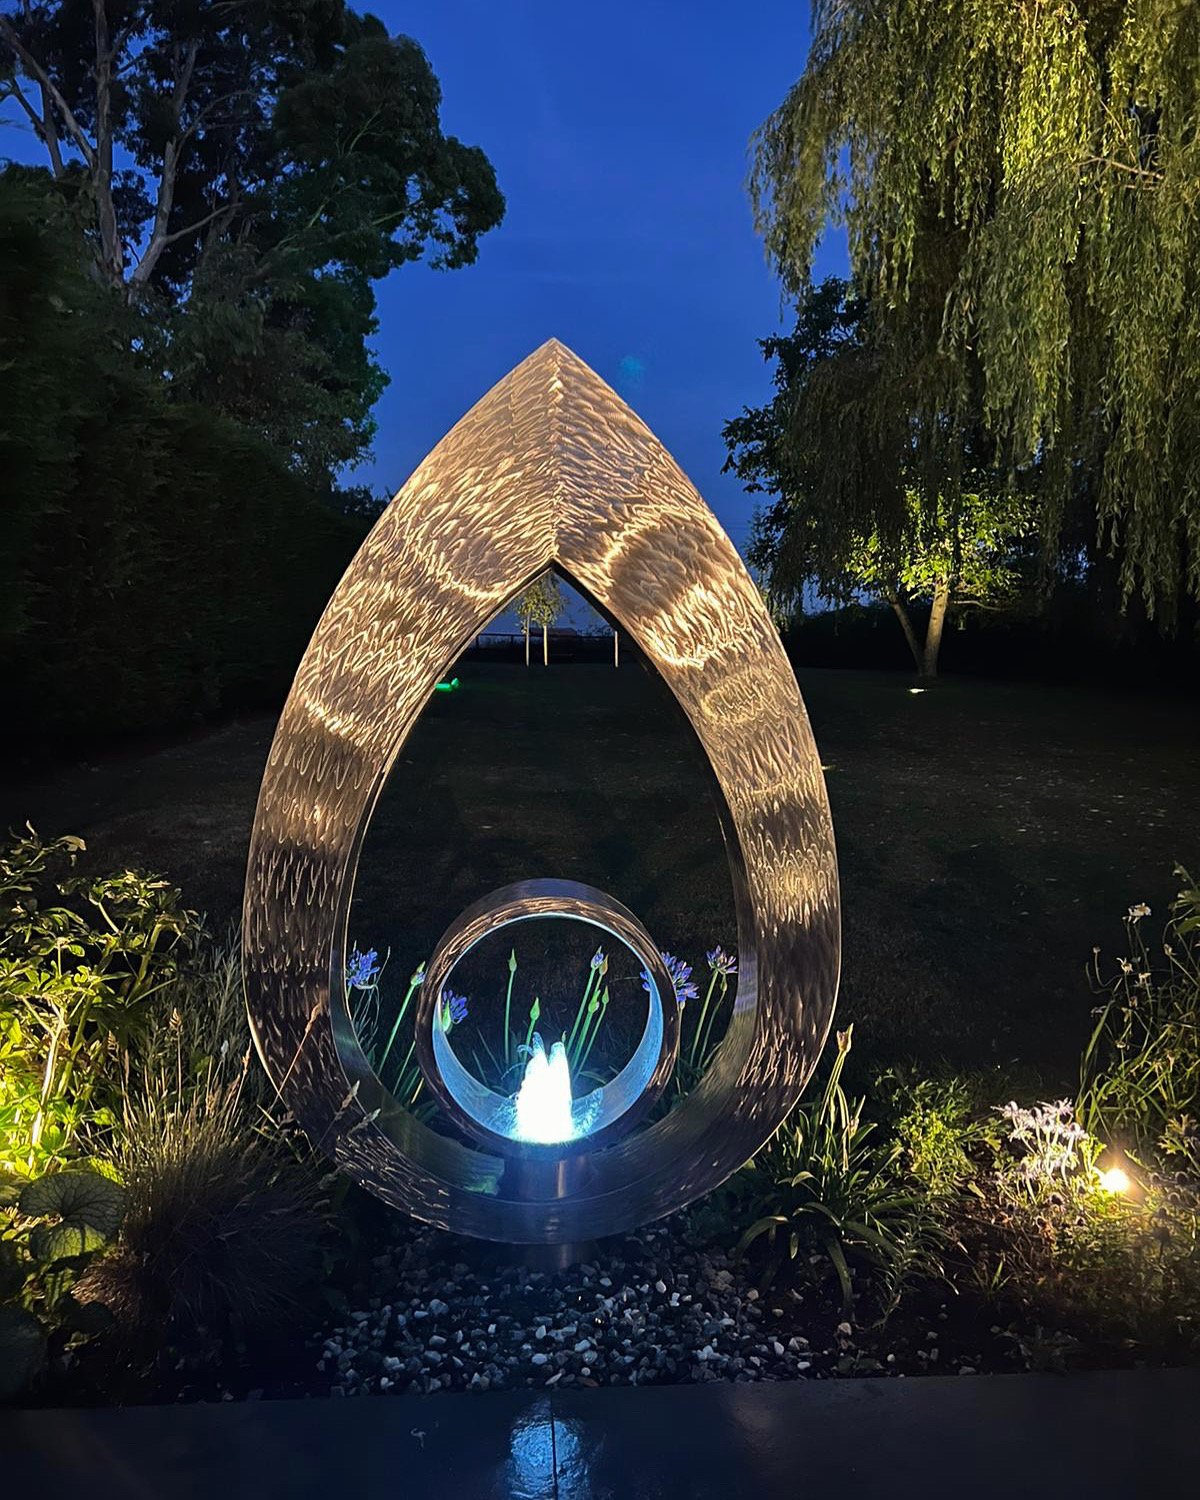 teardrop-water-feature-garden-sculpture-night.JPG